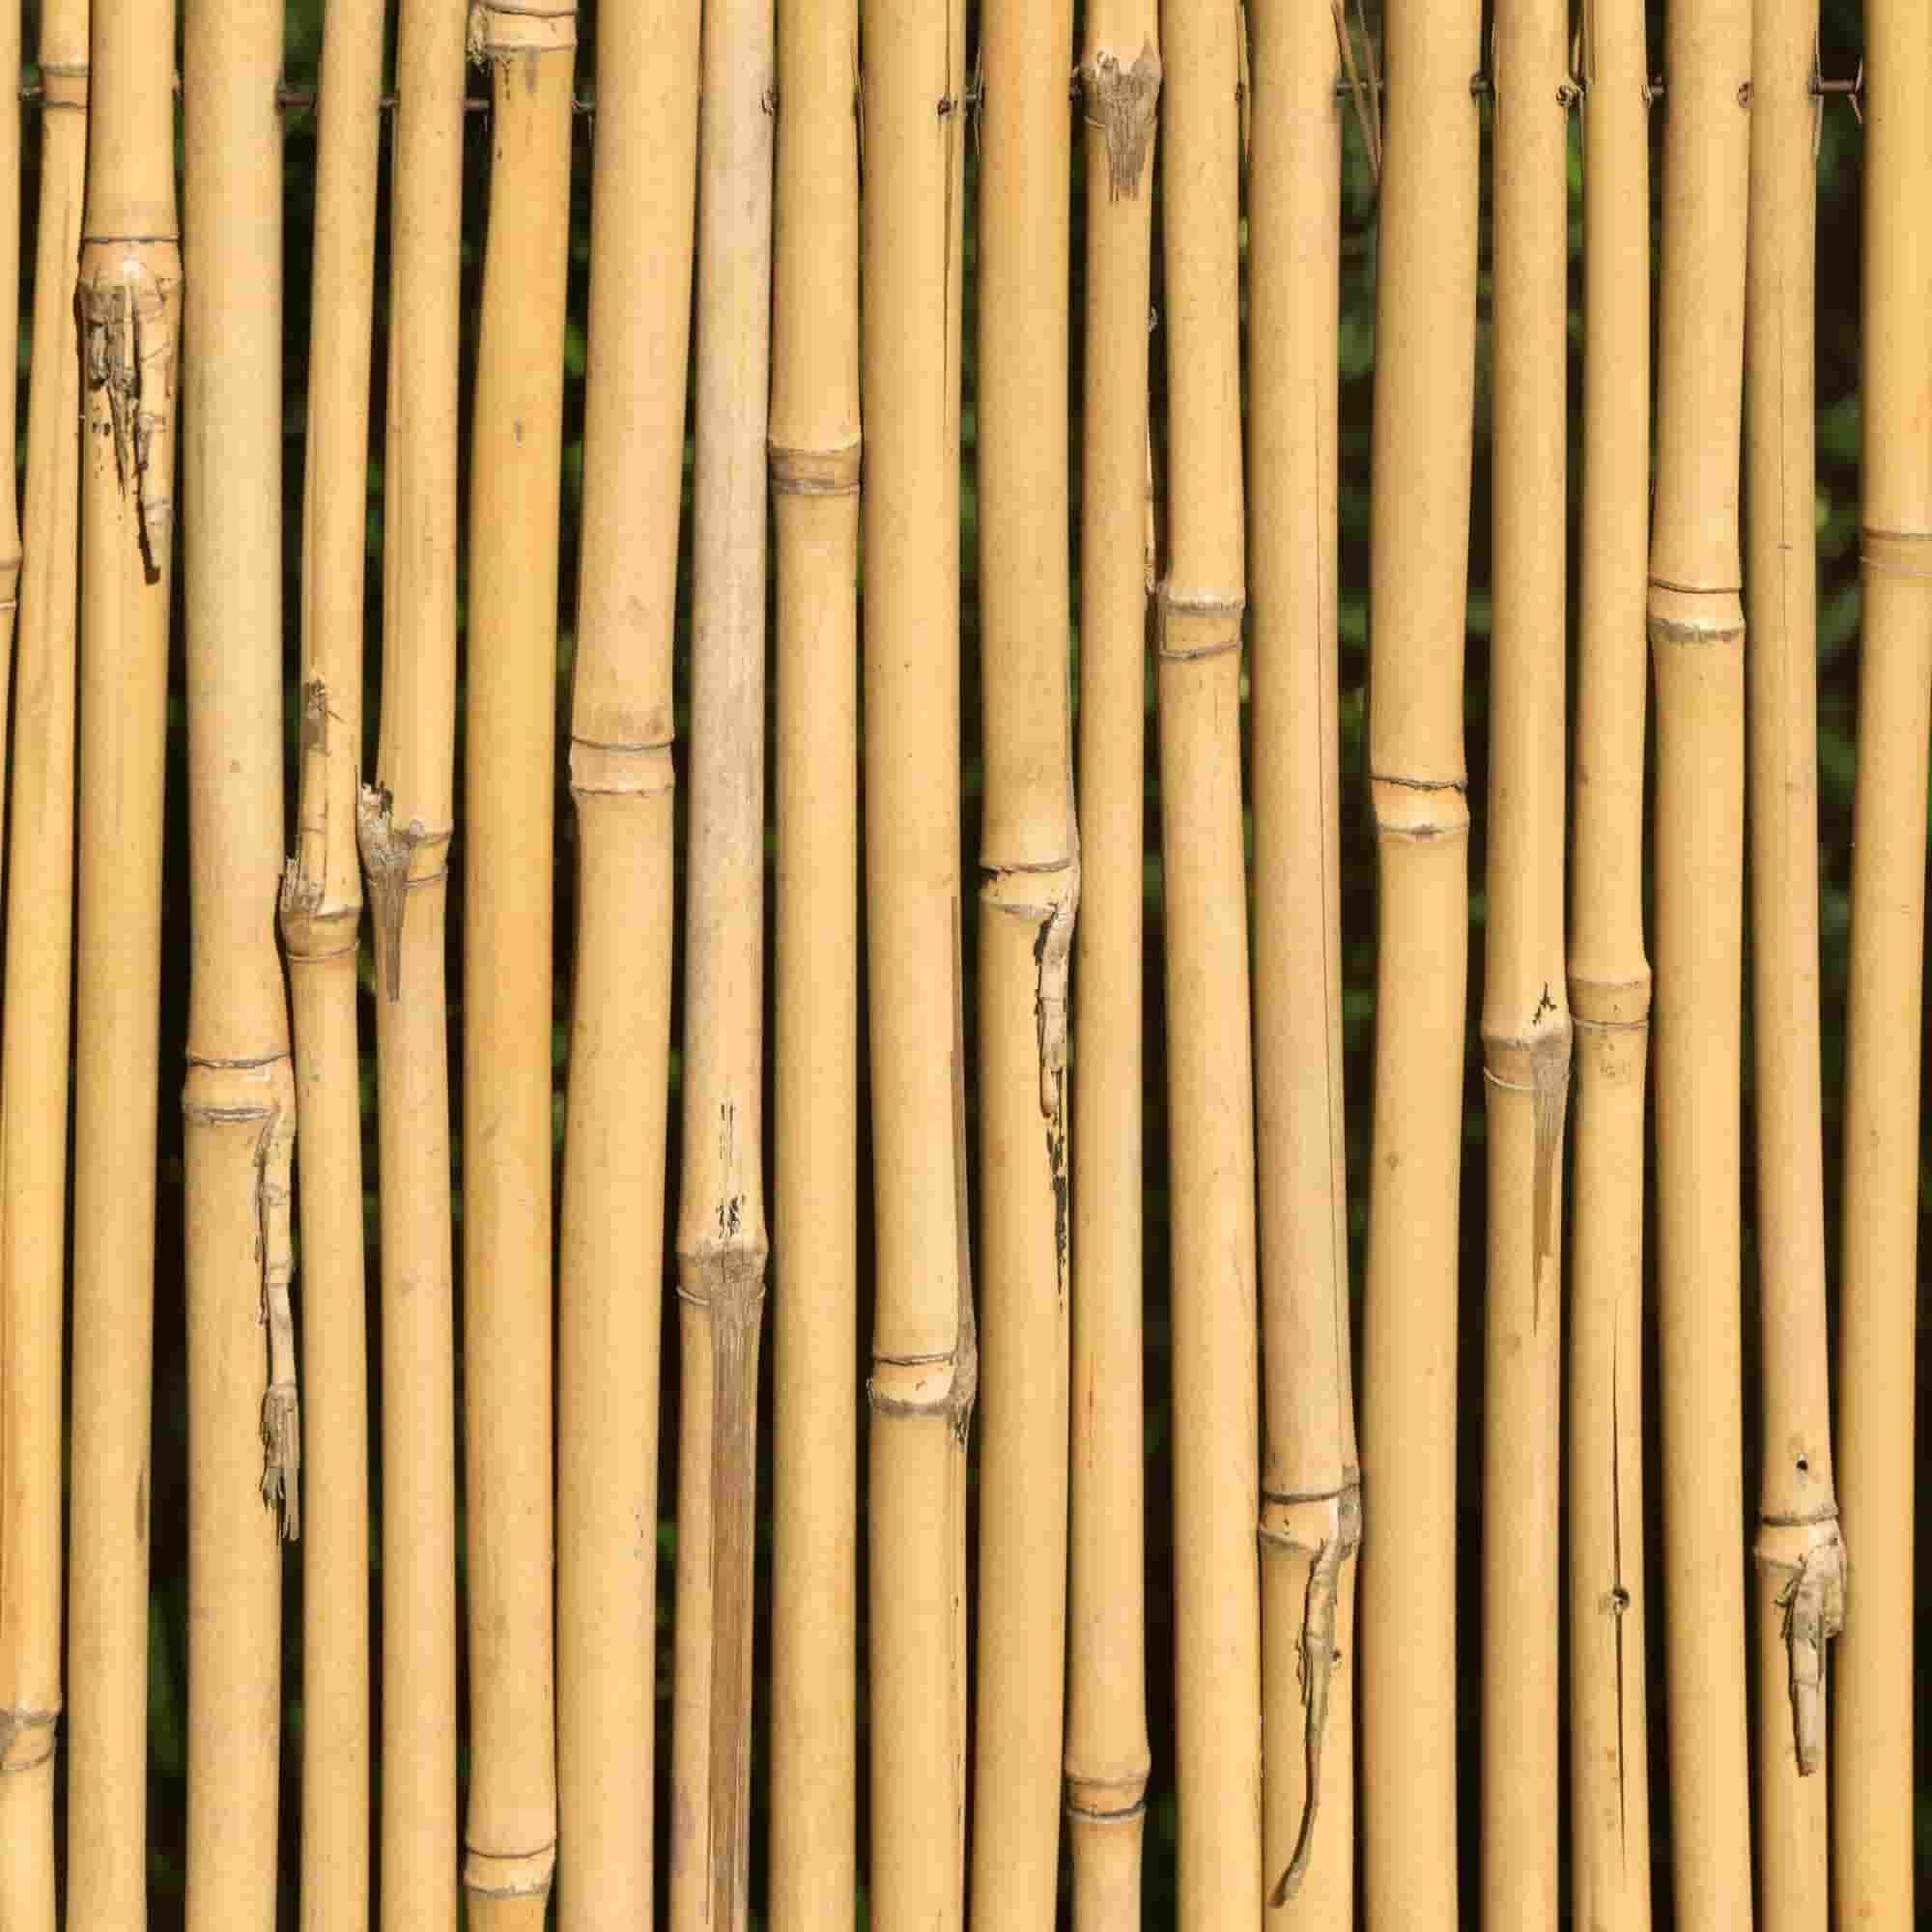 Bamboo building